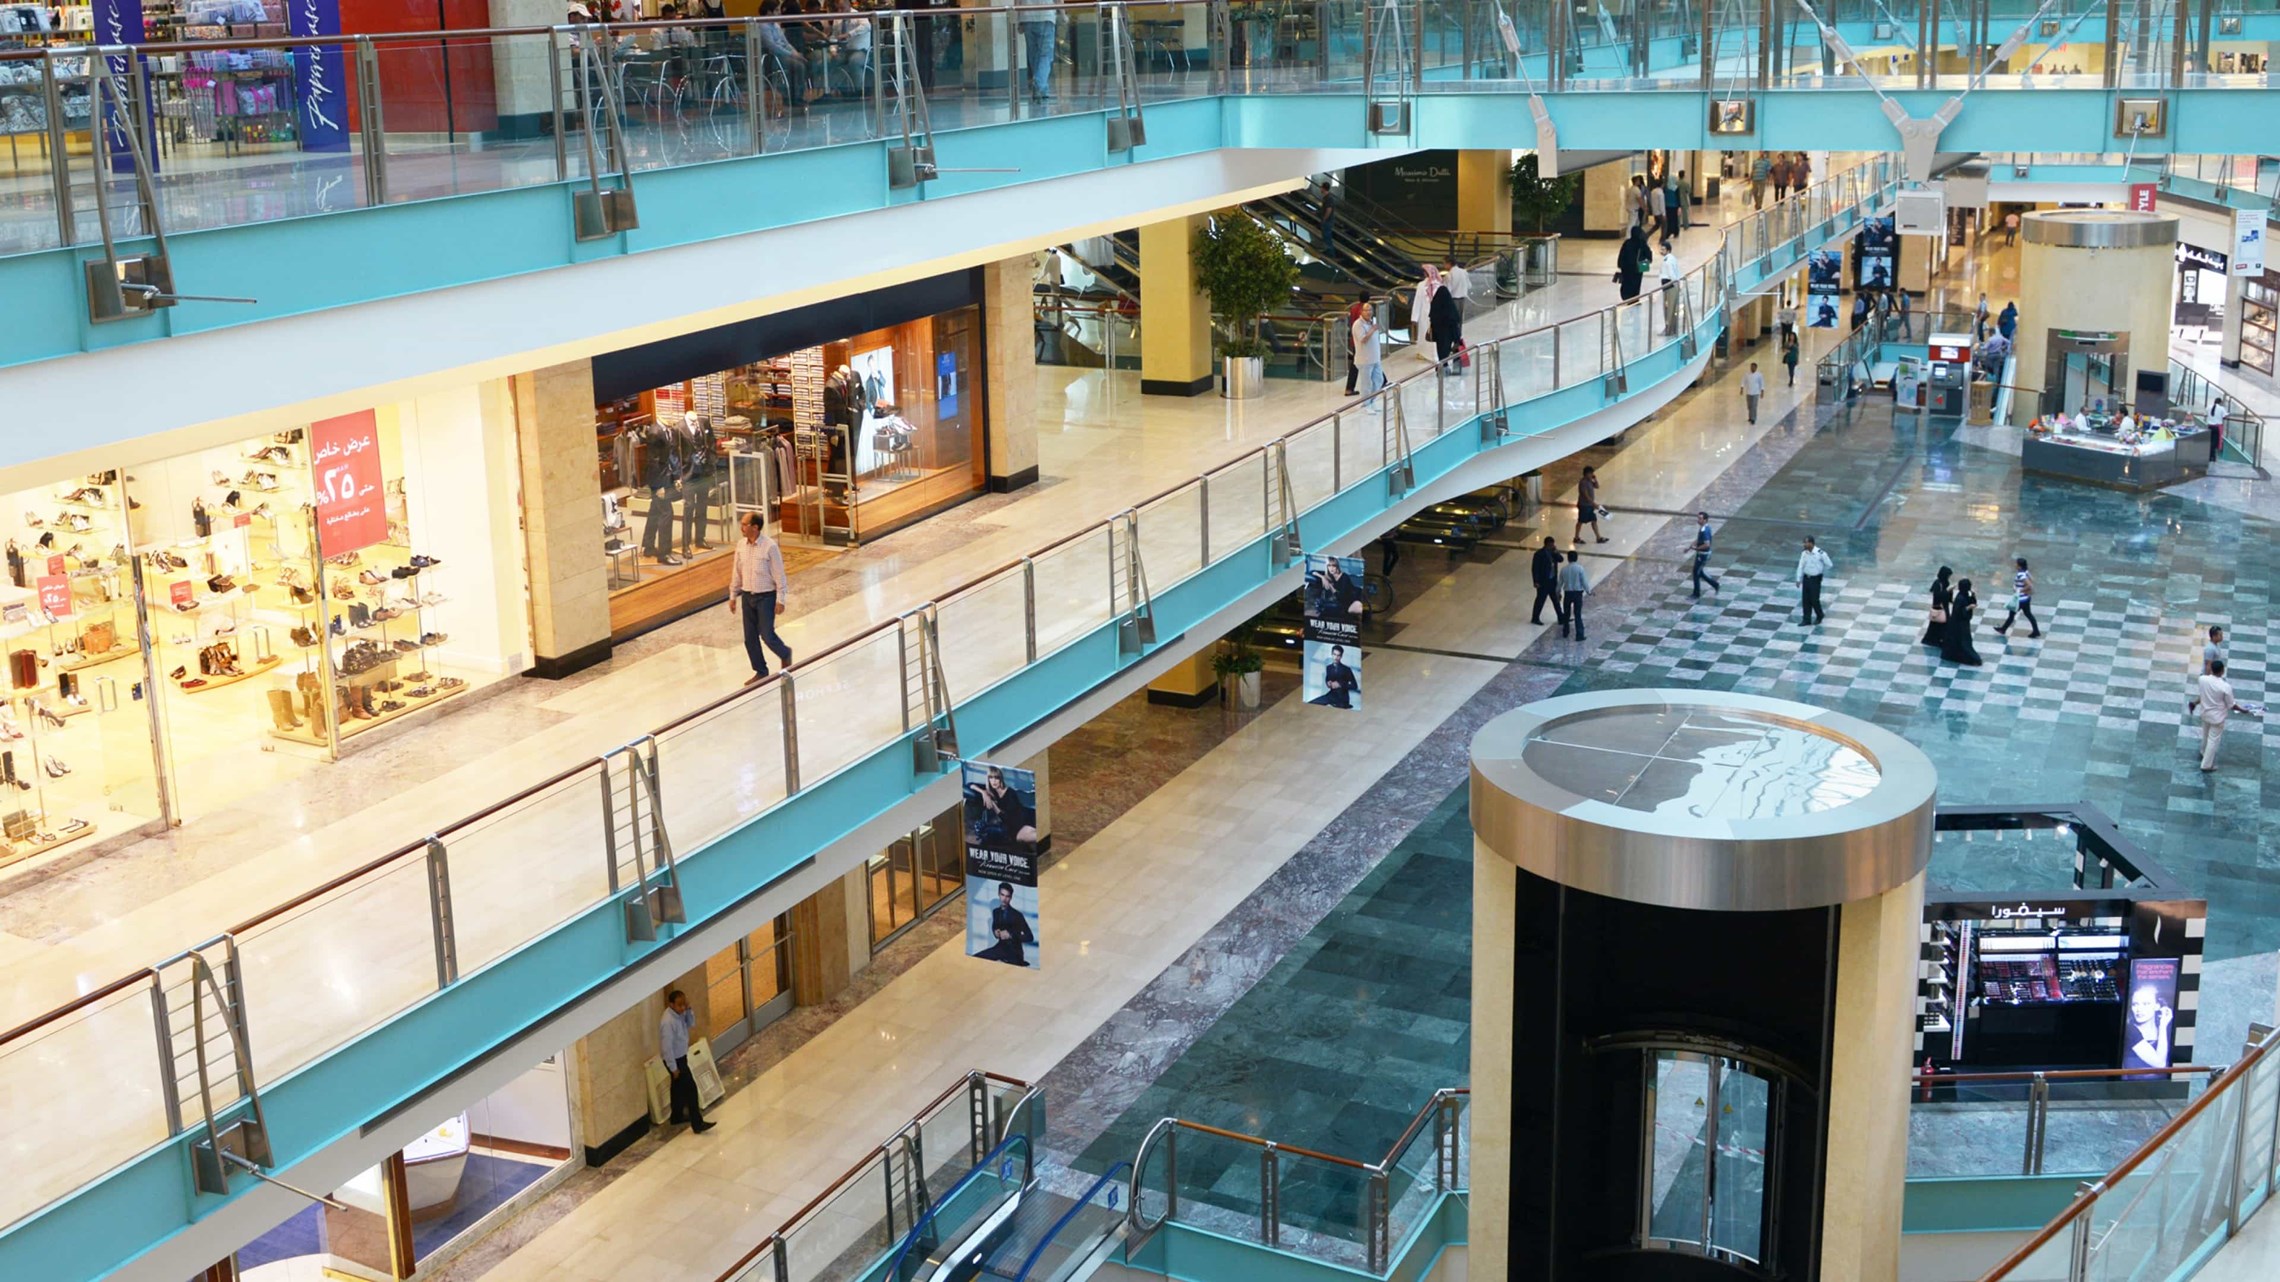 8. Abu Dhabi Mall